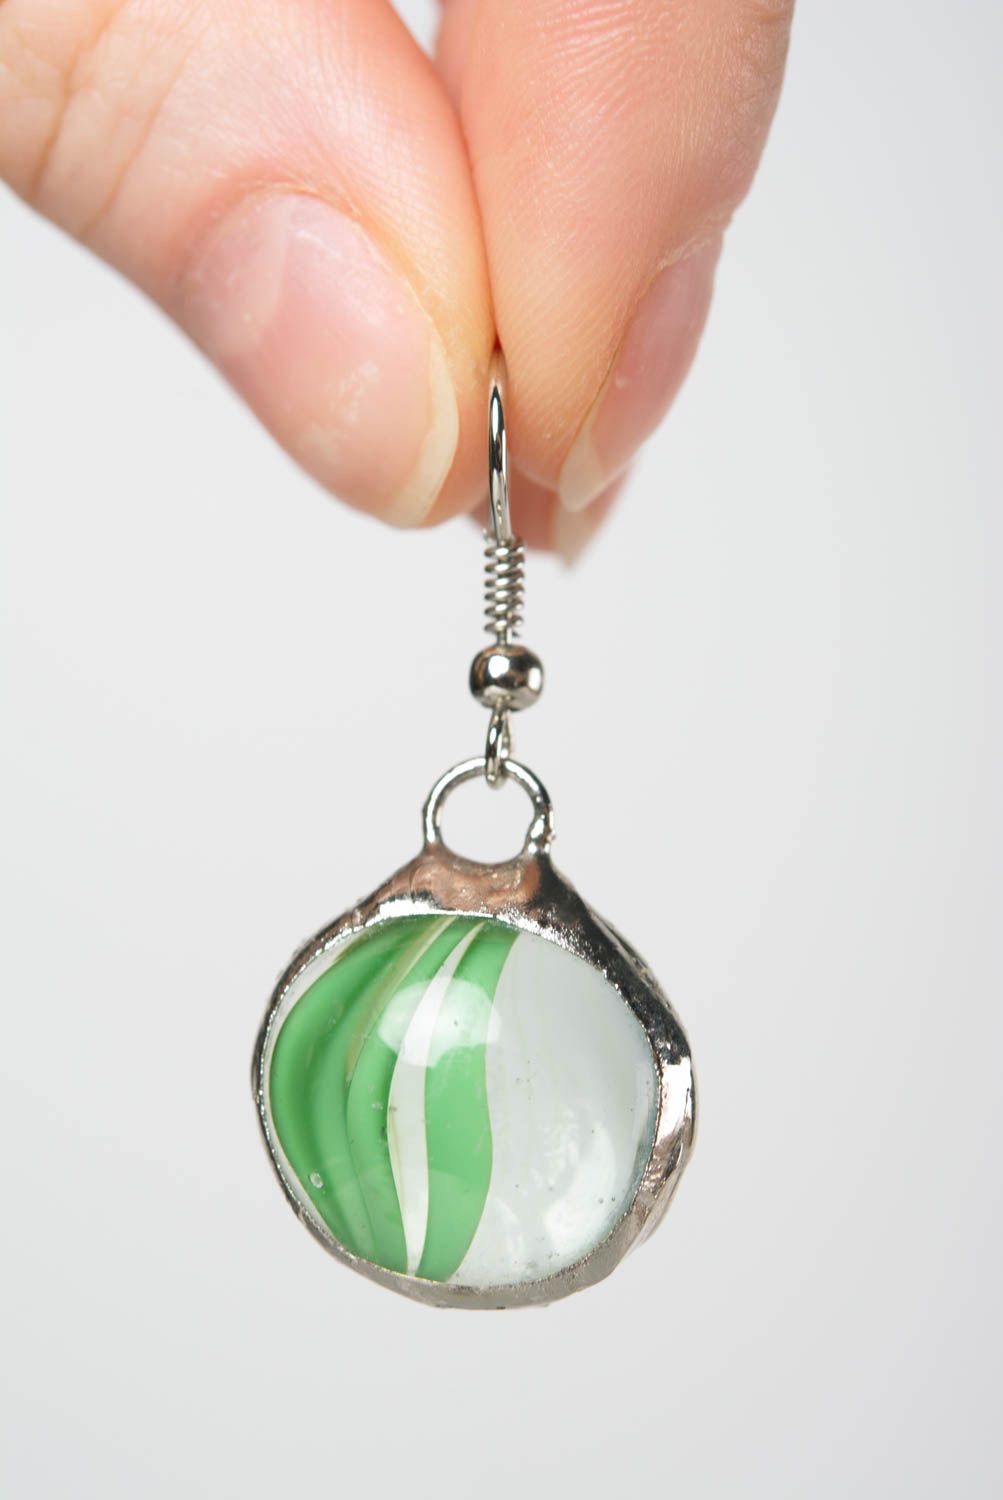 Handmade green glass and metal designer jewelry set wrist bracelet and earrings photo 5